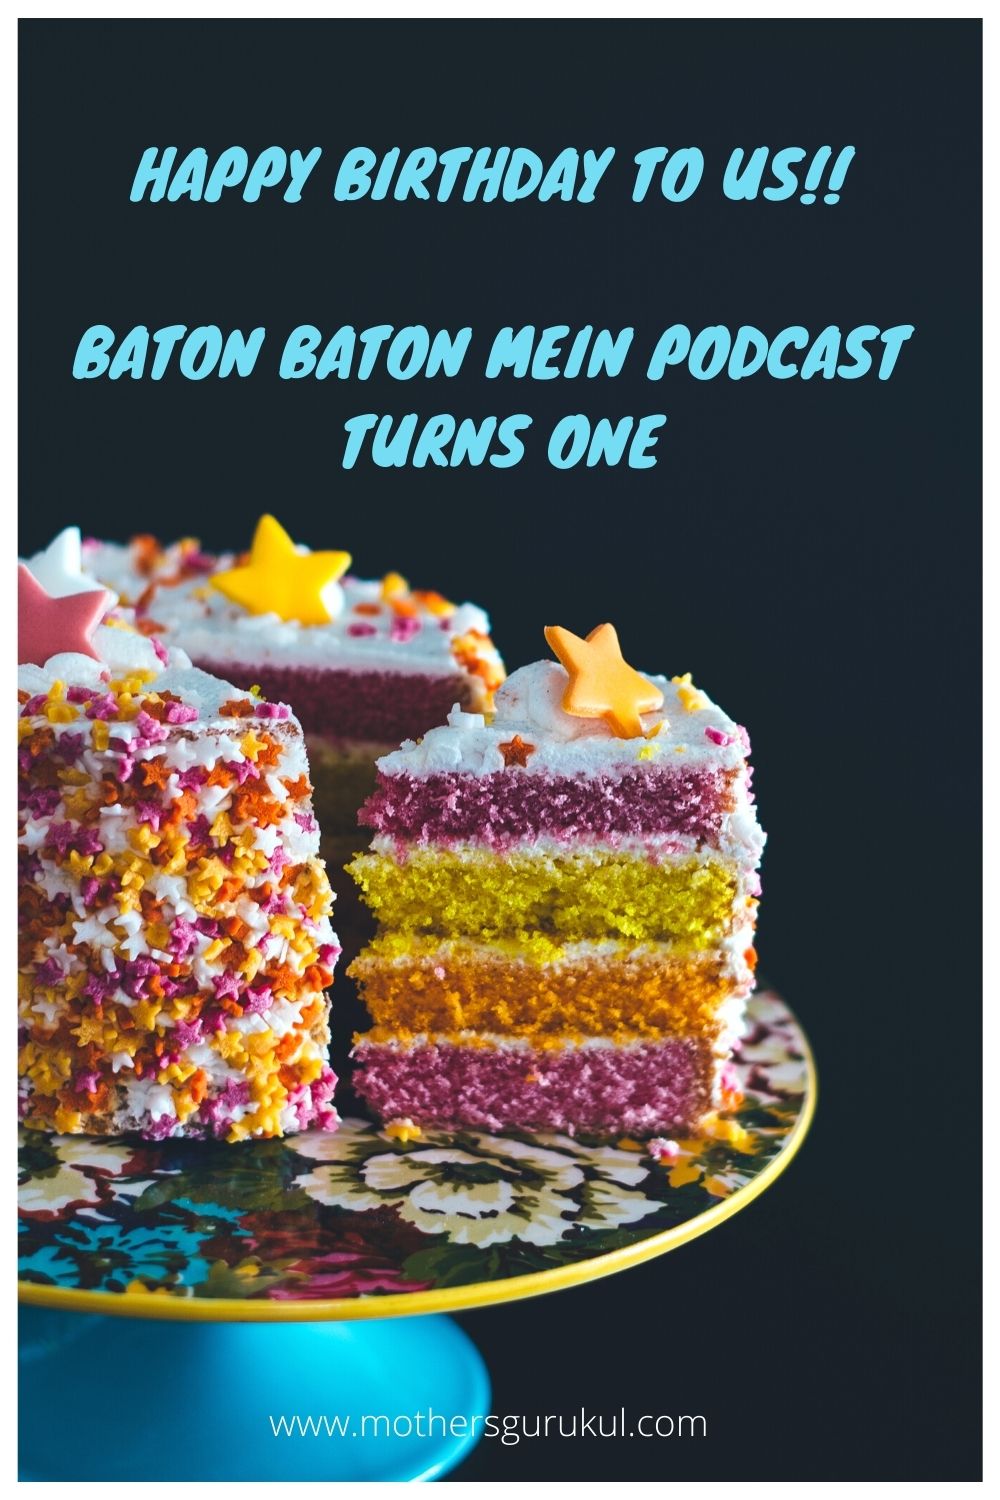 Happy Birthday to us!! Baton Baton Mein Podcast turns one.